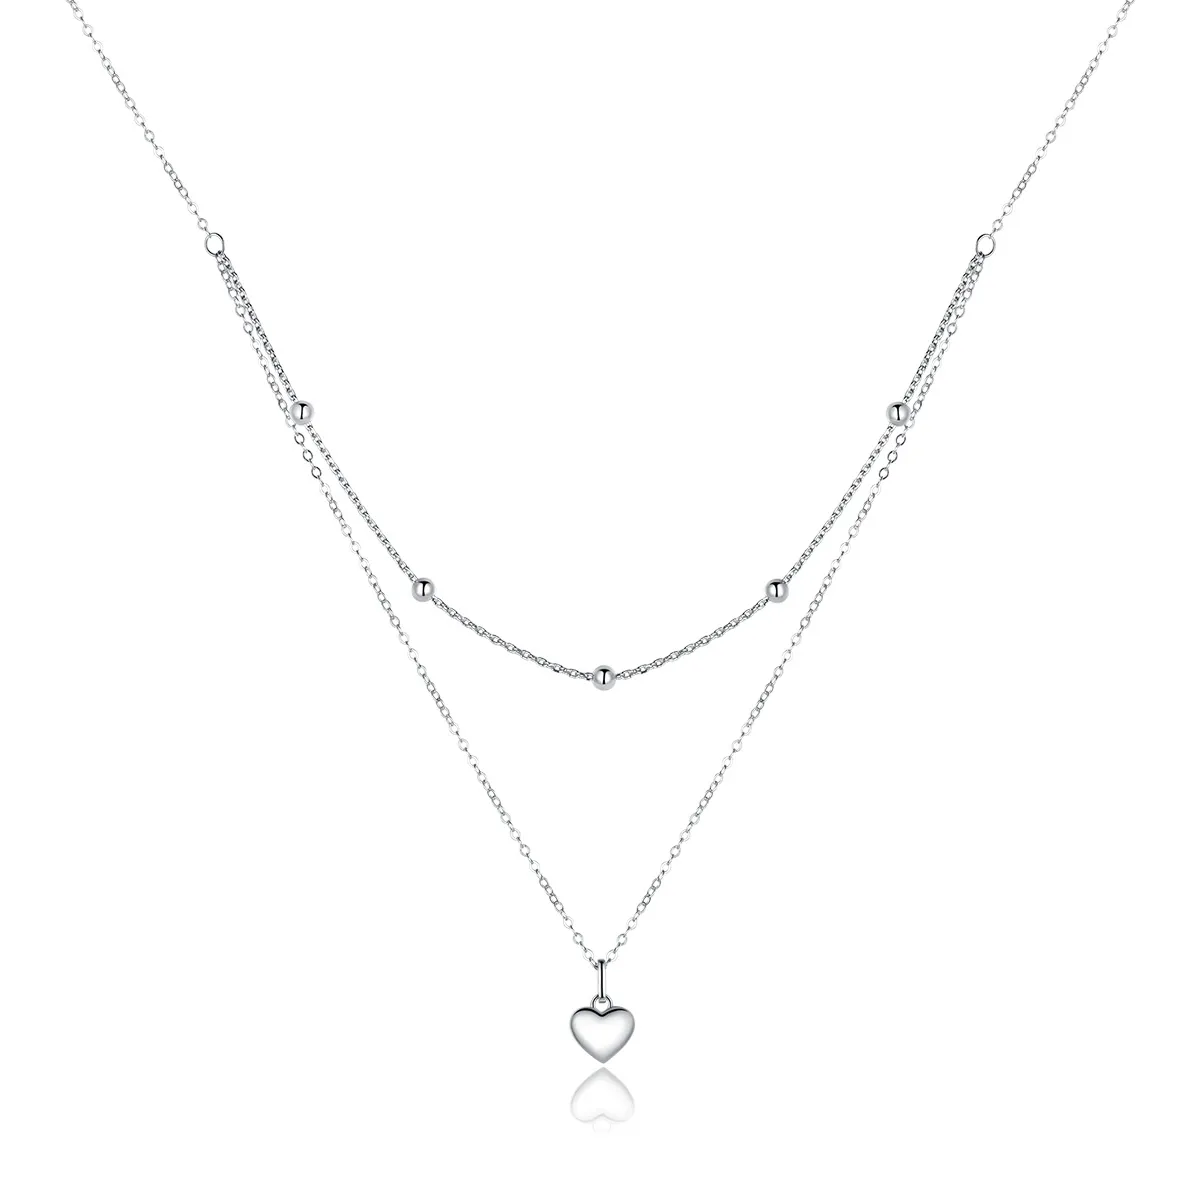 Pandora Style Love Necklace - BSN168